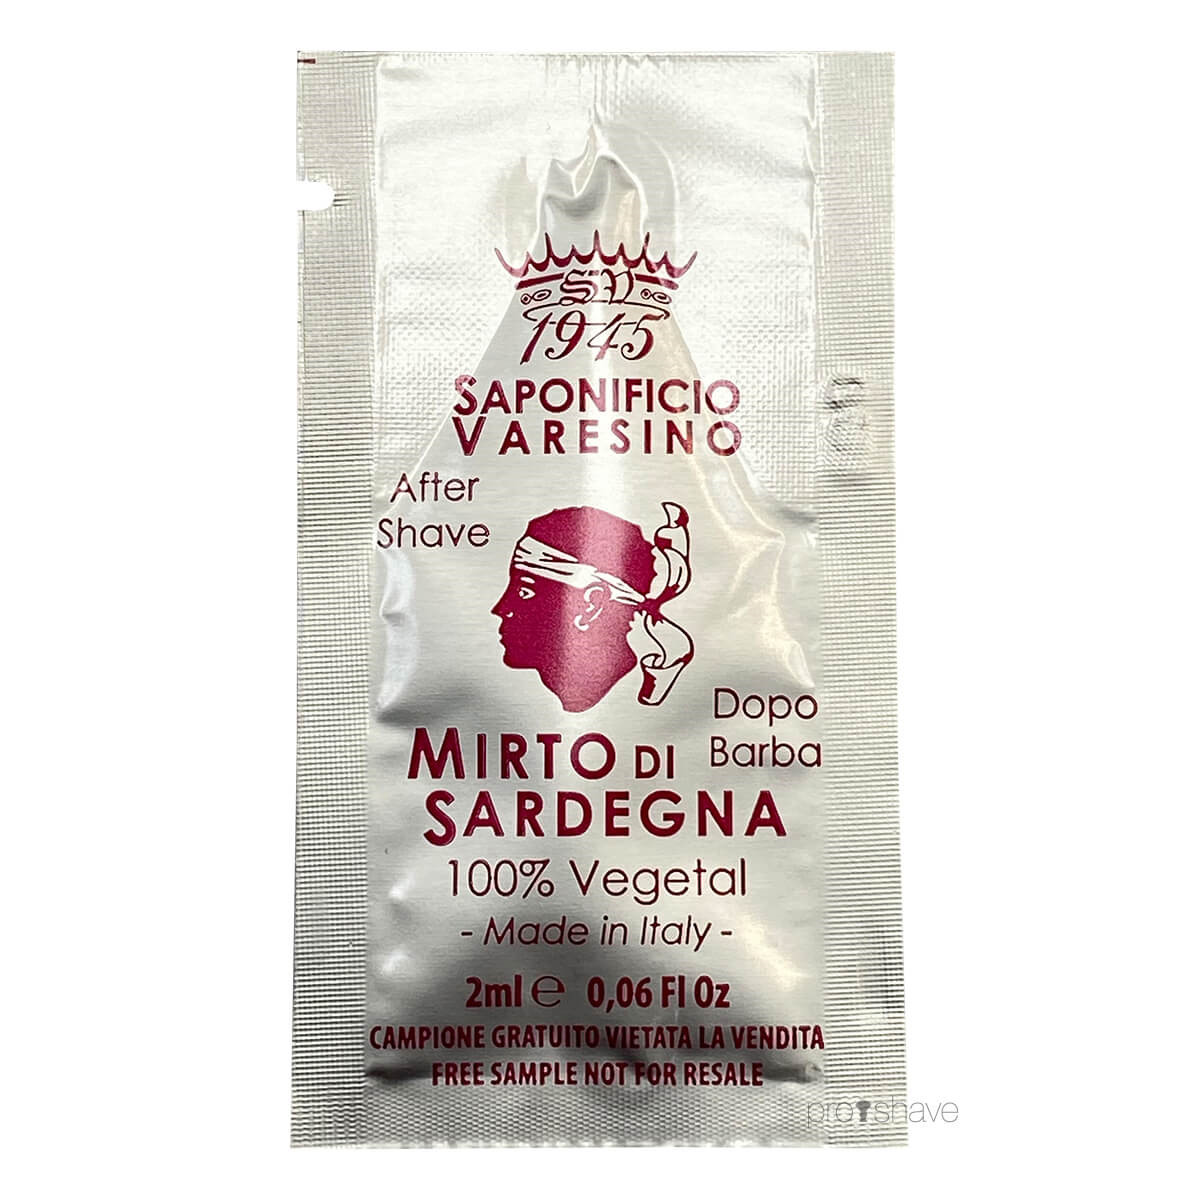 Se Saponificio Varesino Aftershave, Mirto di Sardegna, SAMPLE, 2 ml. hos Proshave